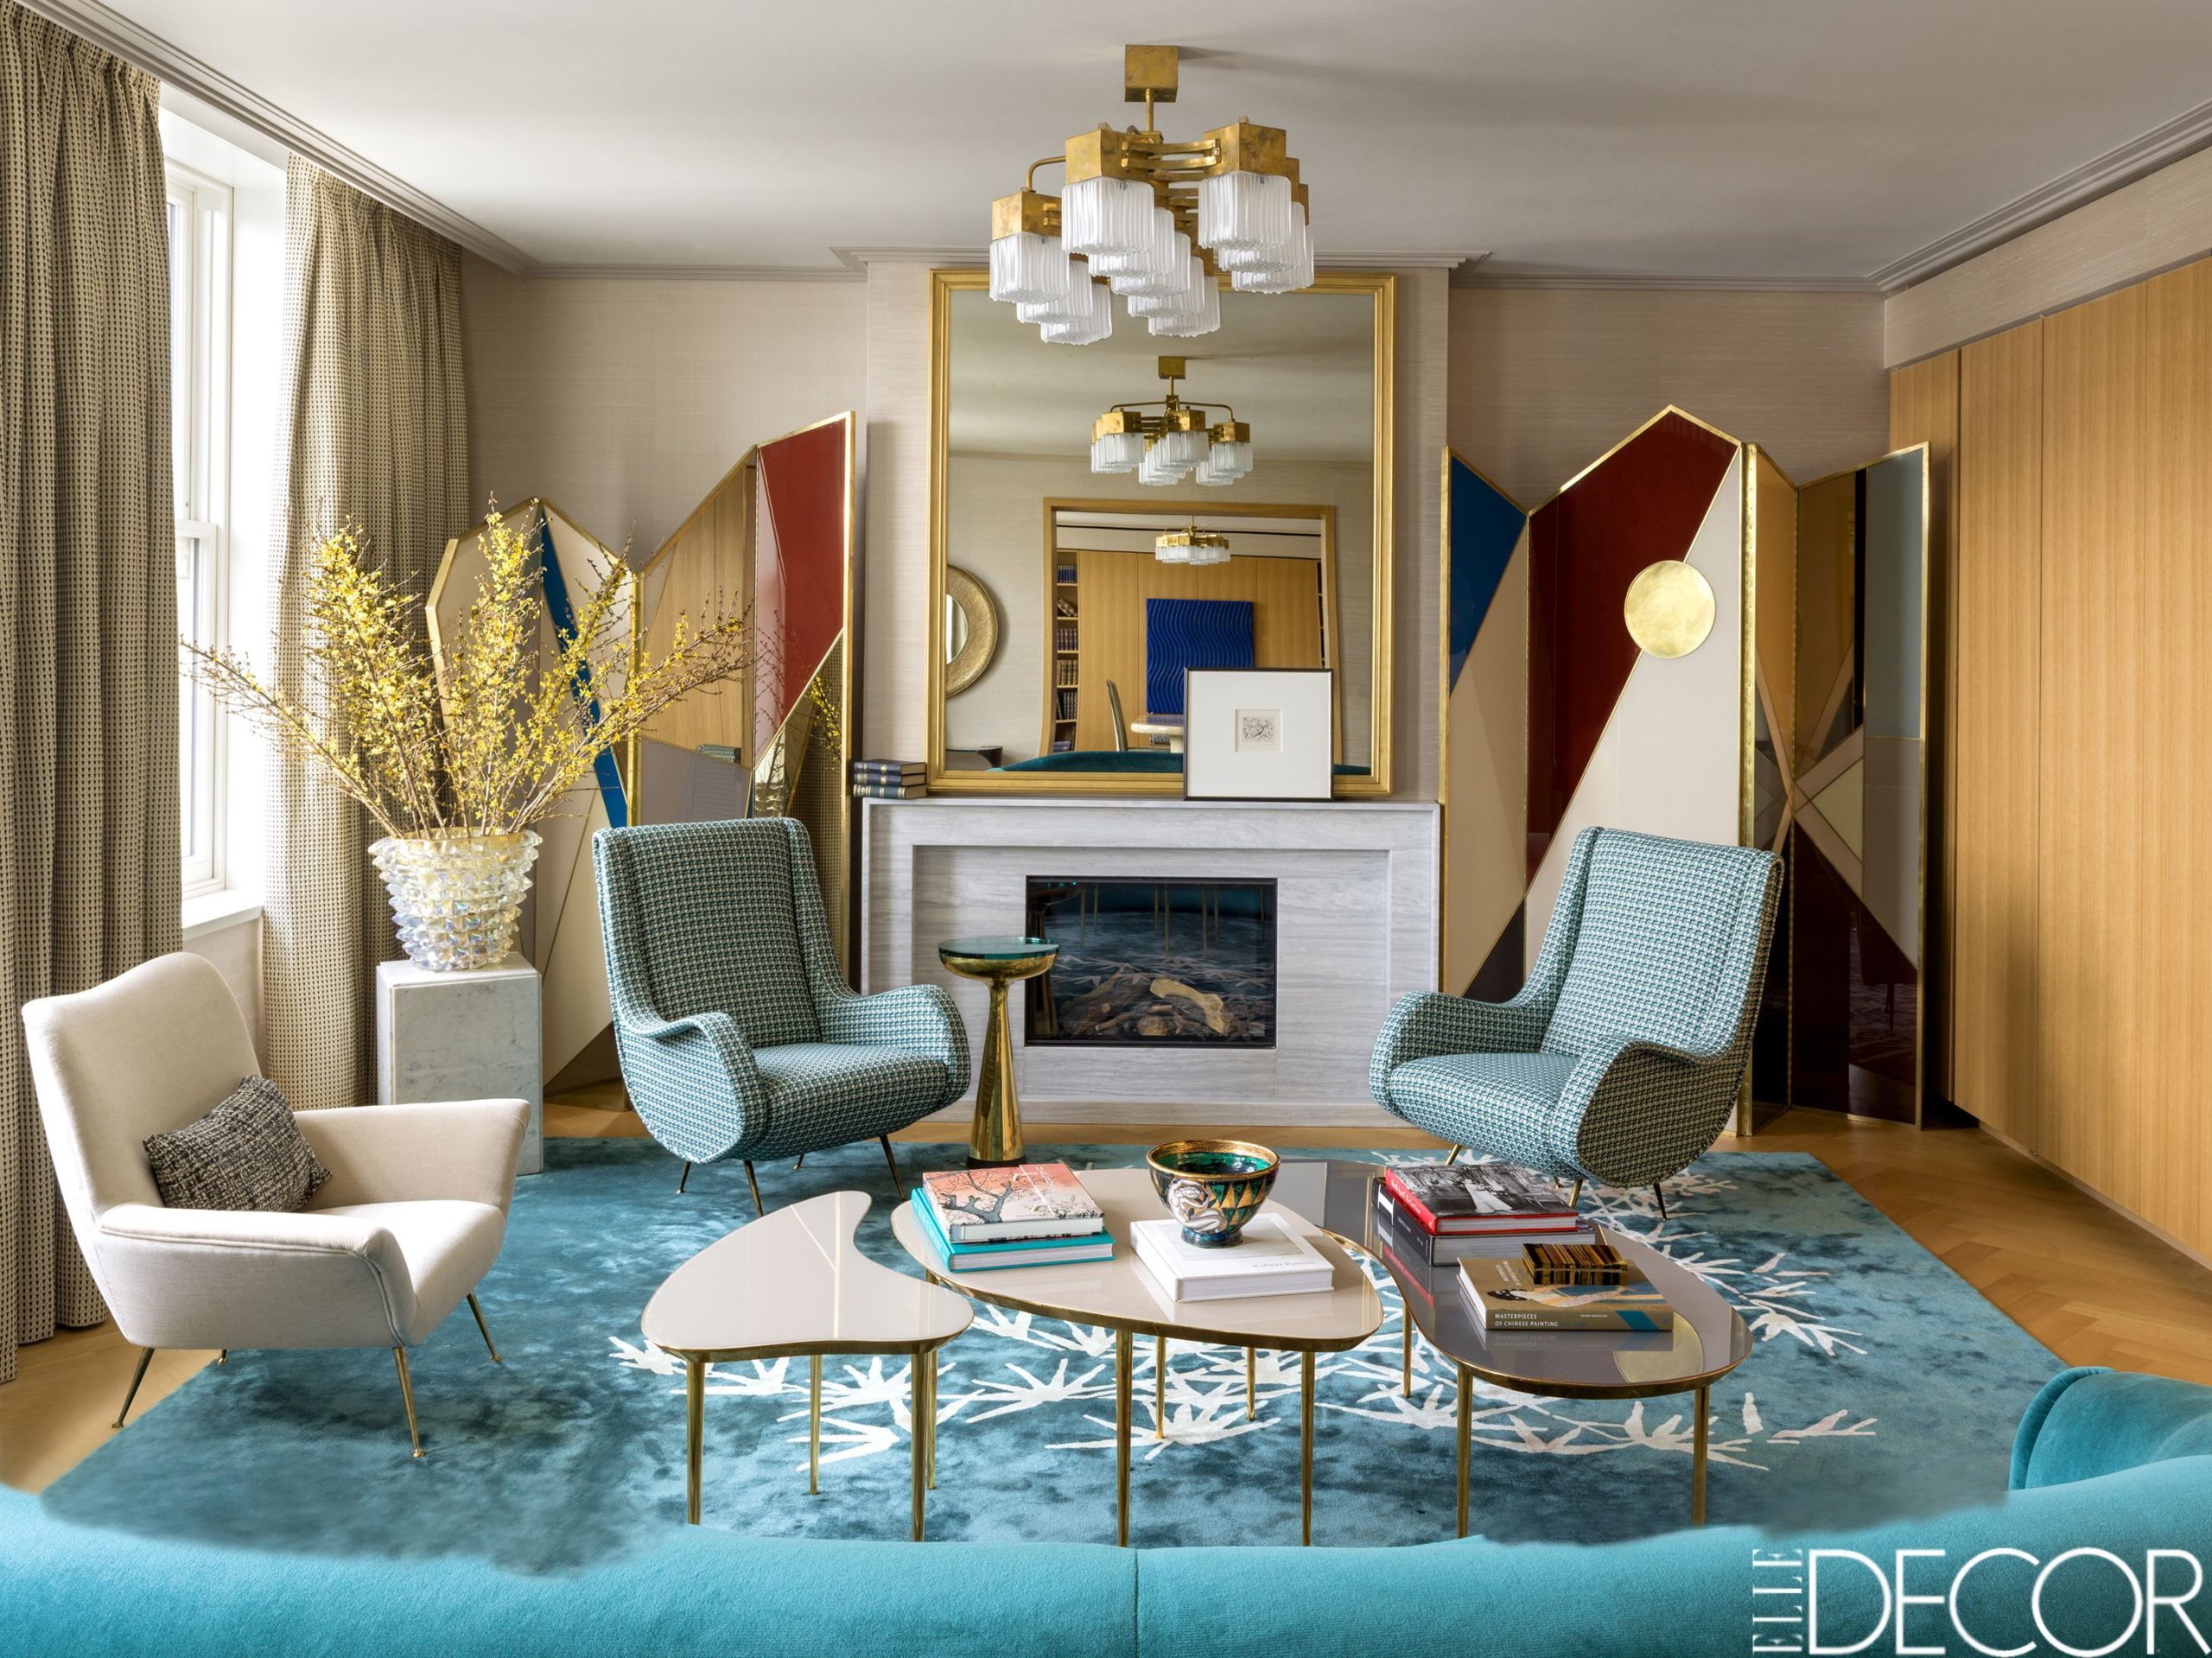 Home Decor Magazines – Obtain Excellent Tips to Create Interior Decoration